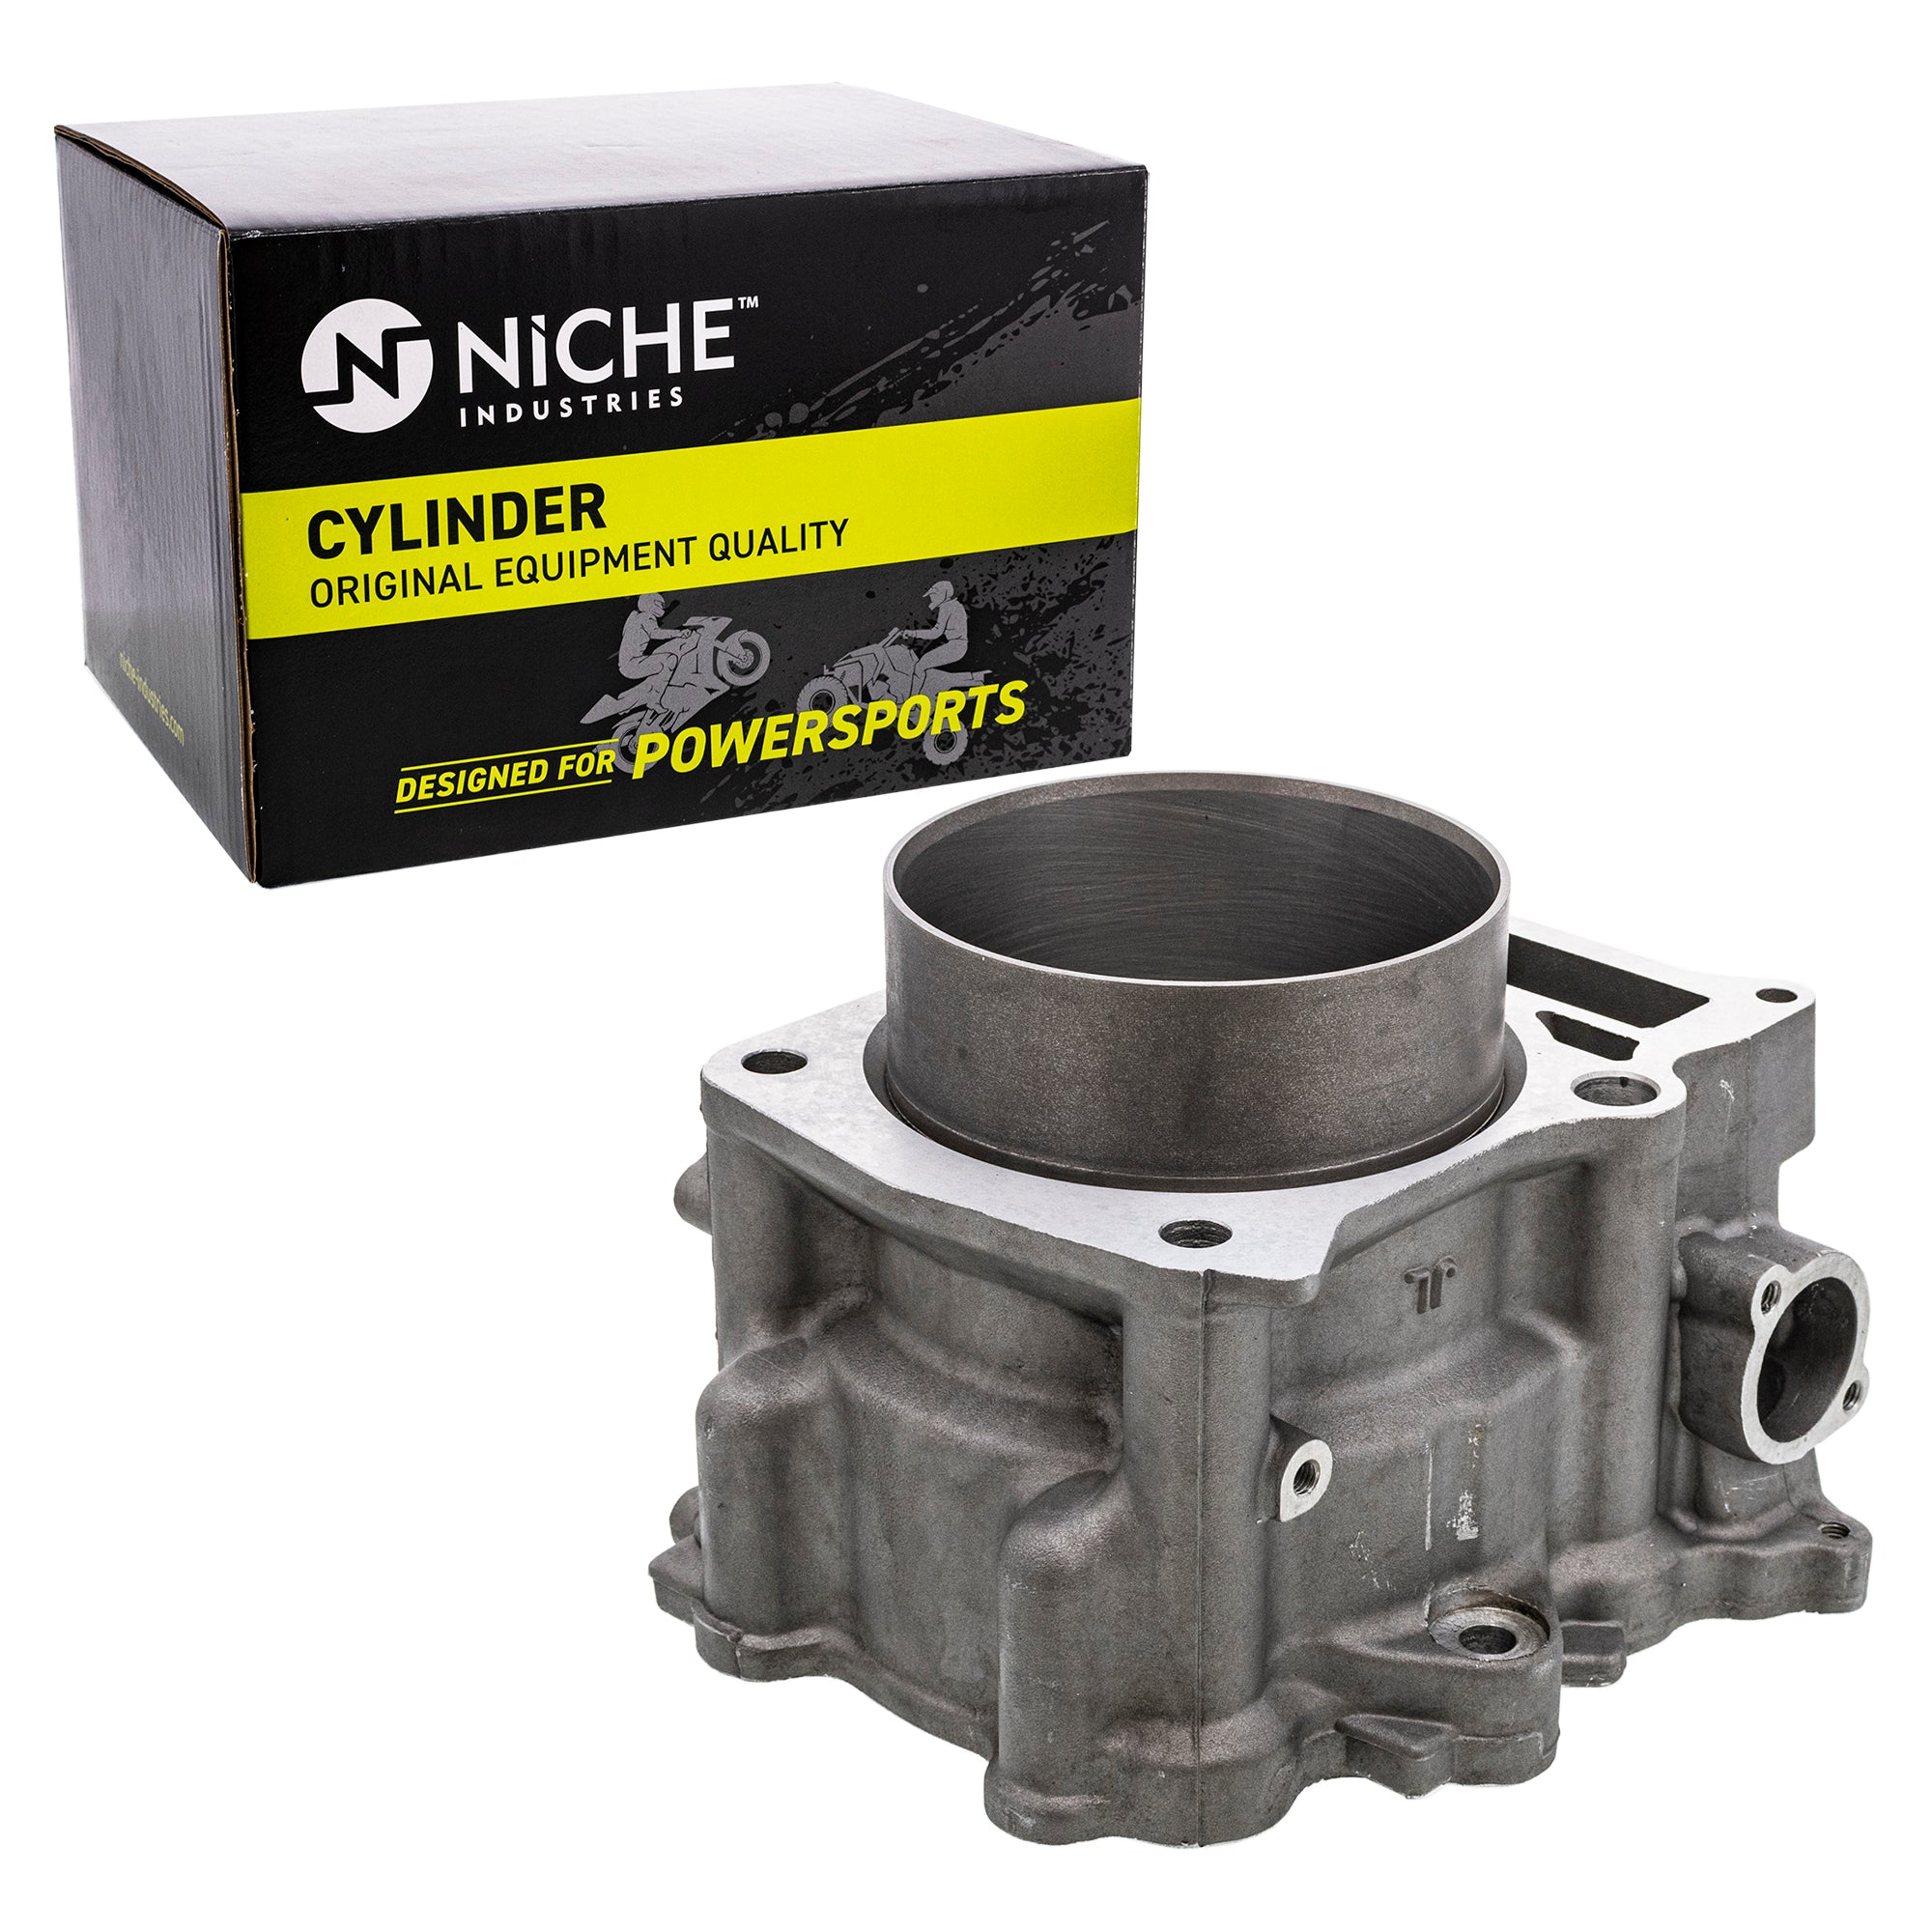 NICHE MK1012498 Cylinder Kit for Rhino Raptor Grizzly